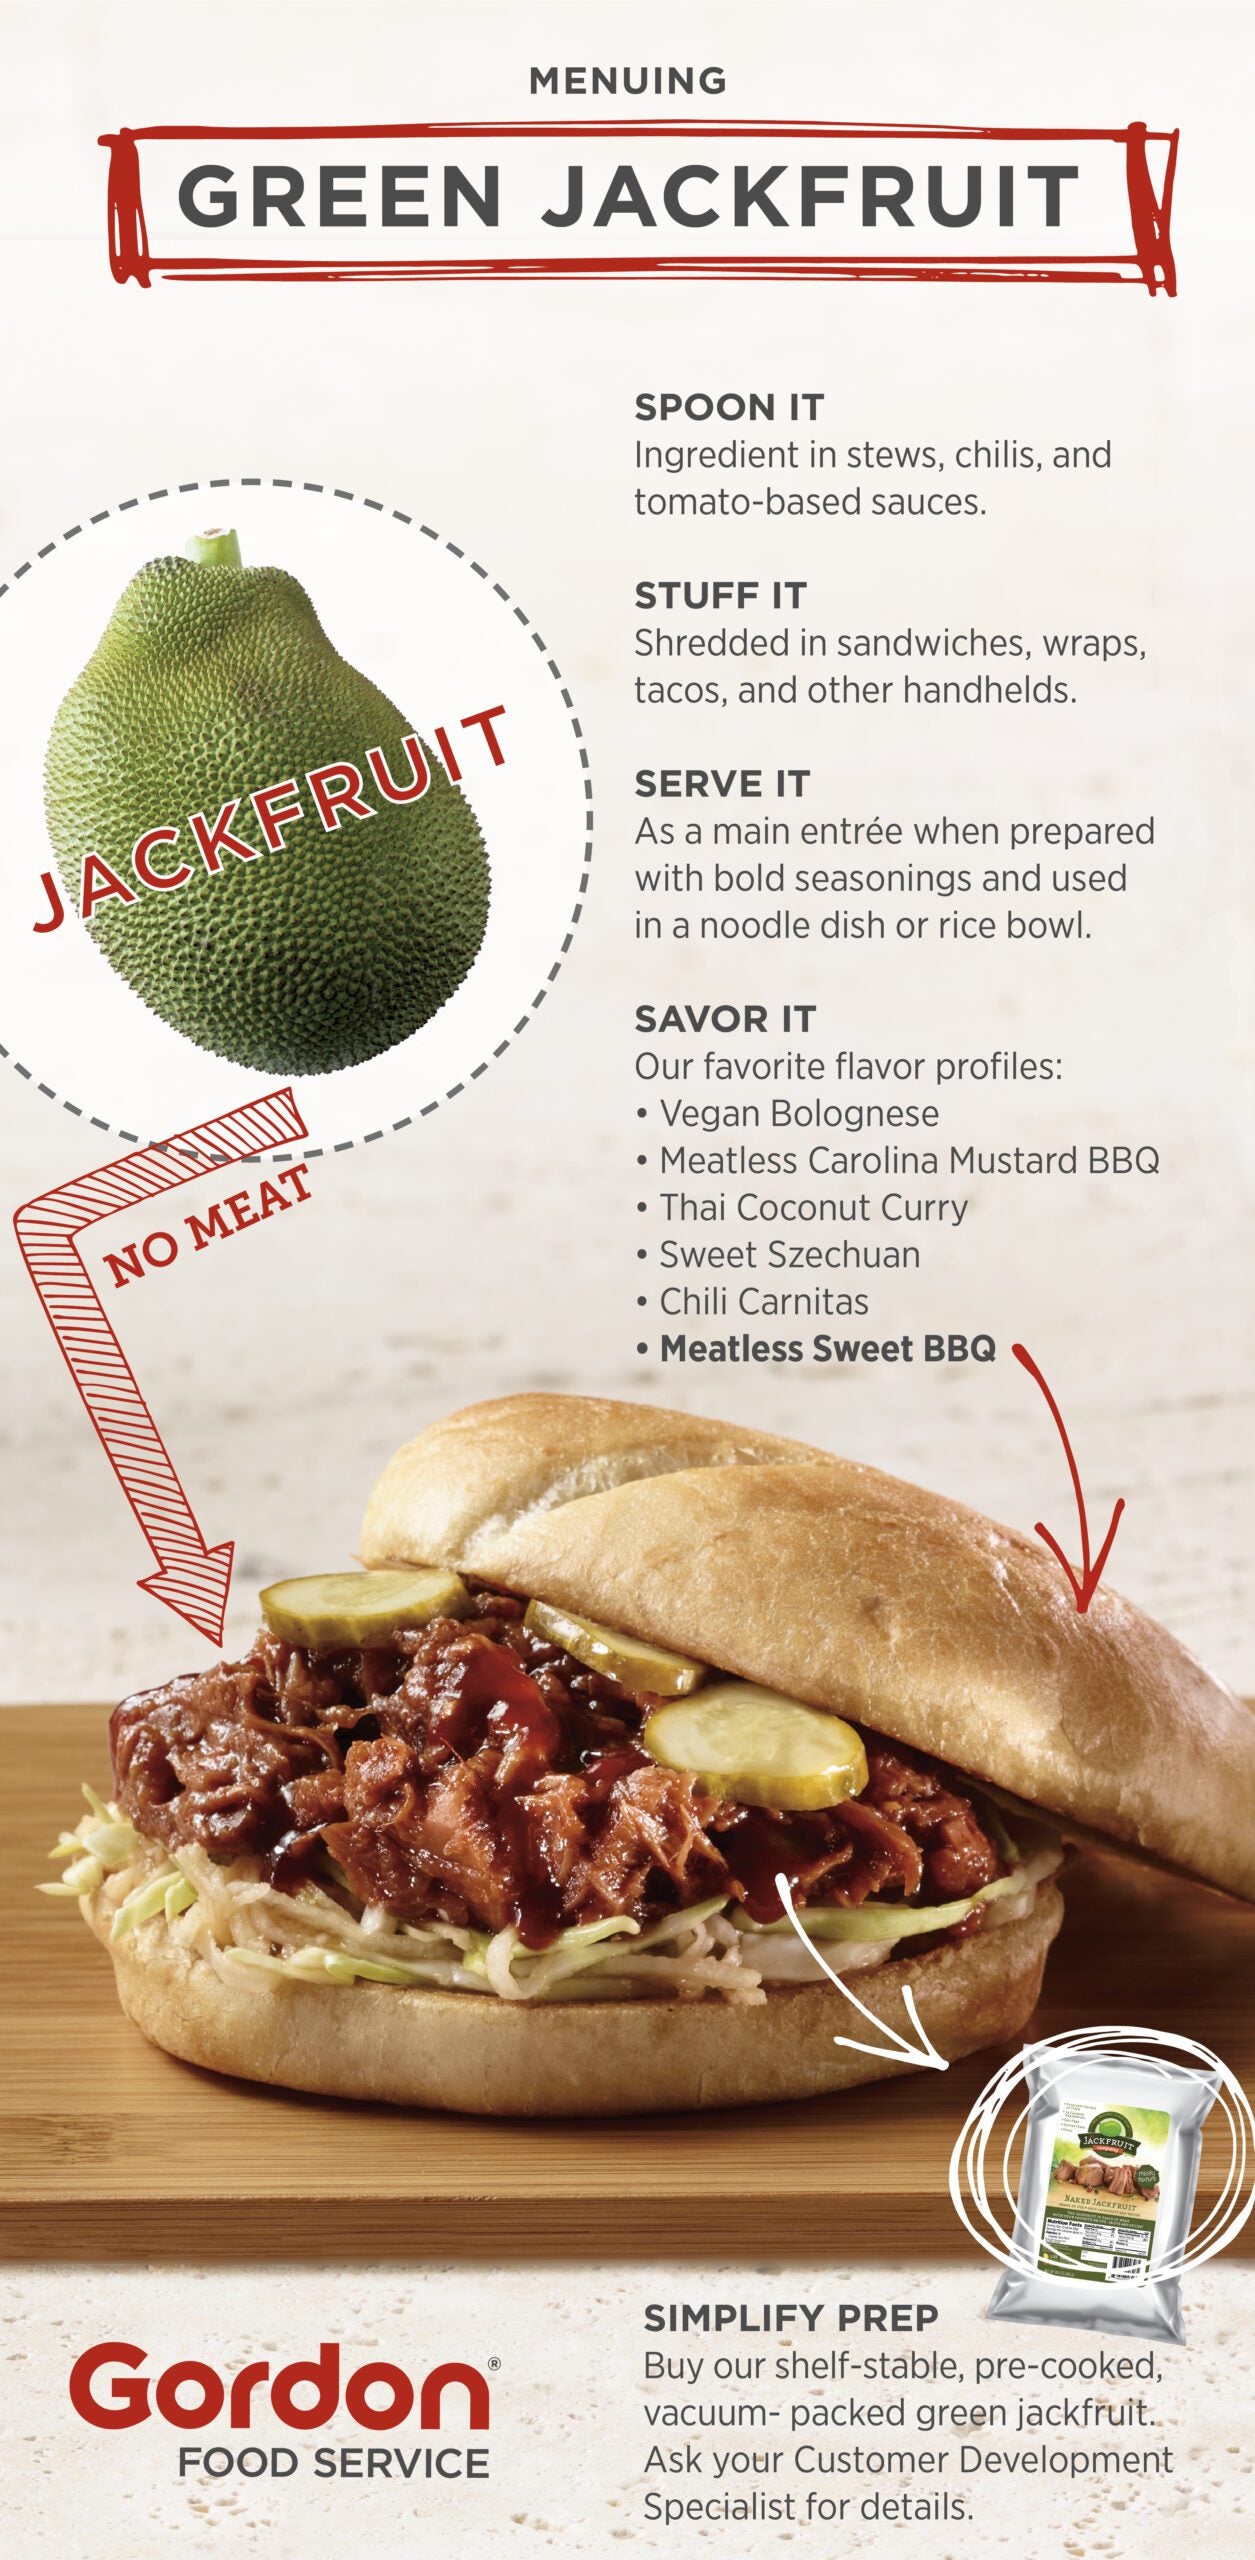 Ideas for Menuing Jackfruit